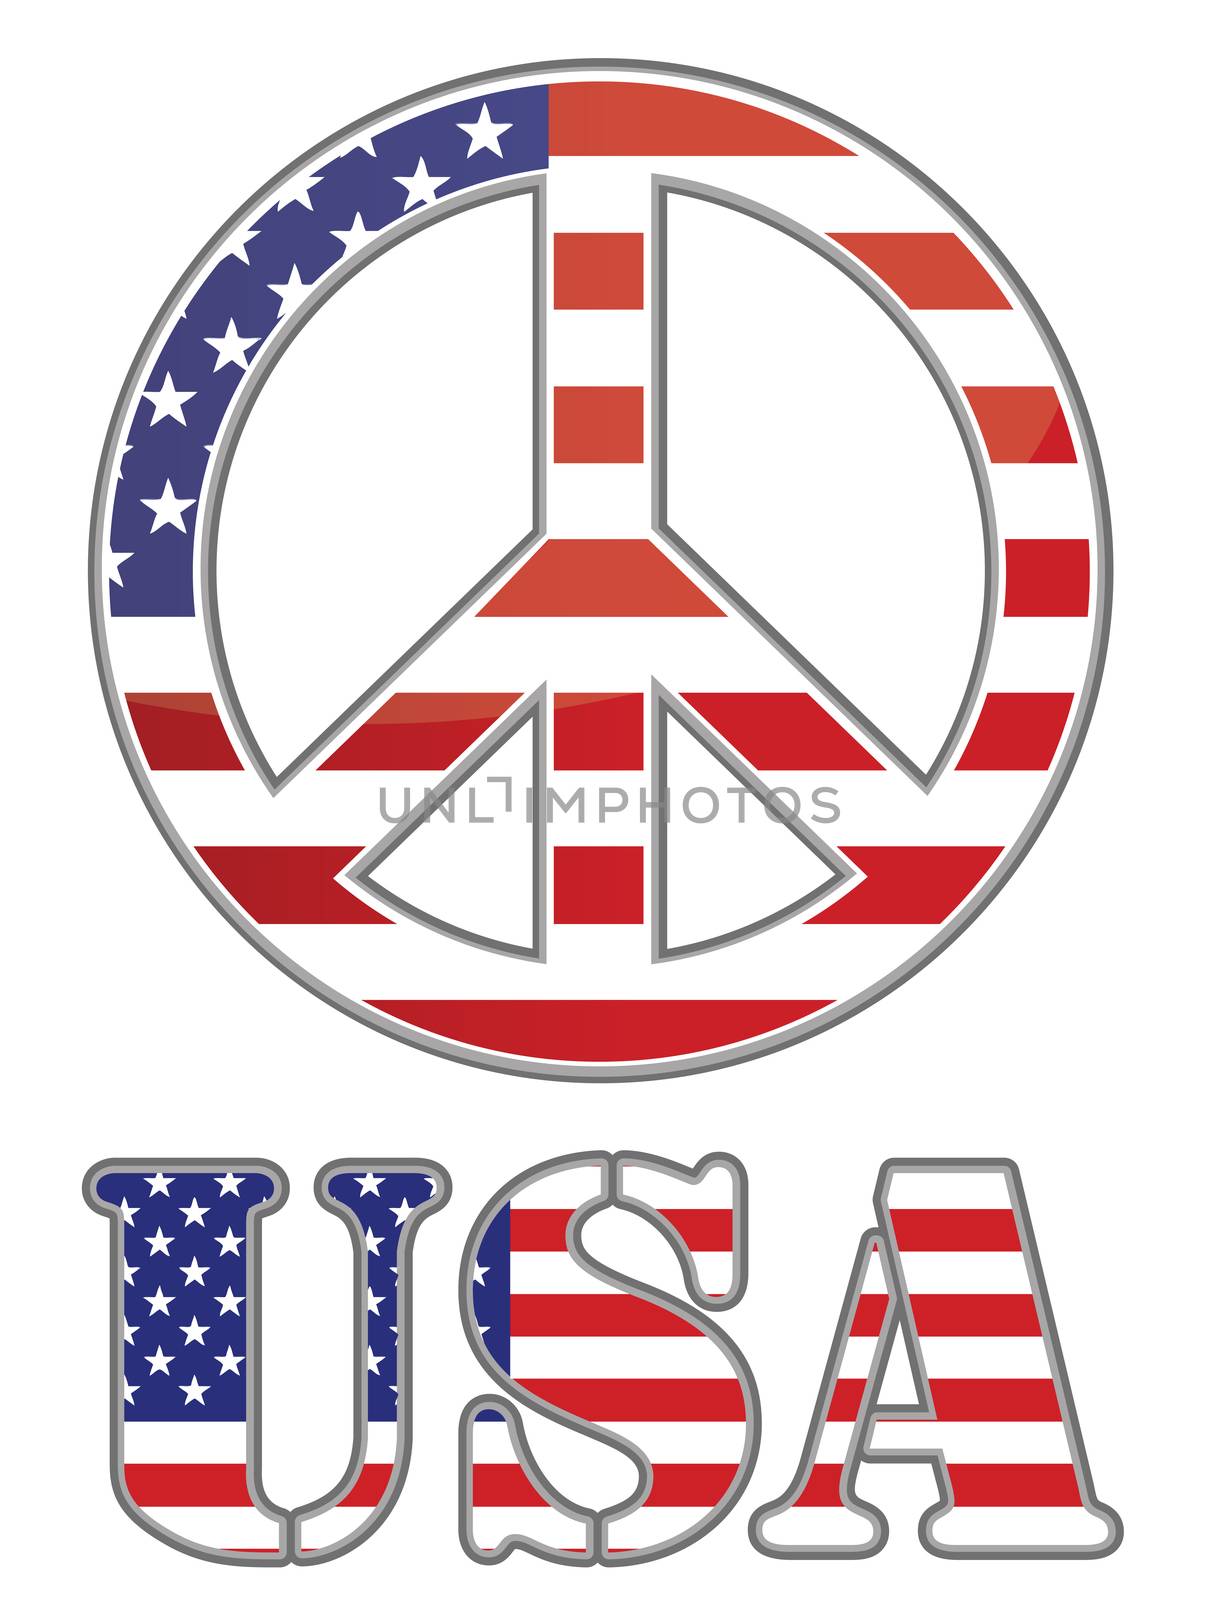 United states peace sign on white background. Vector file available / United states peace sign